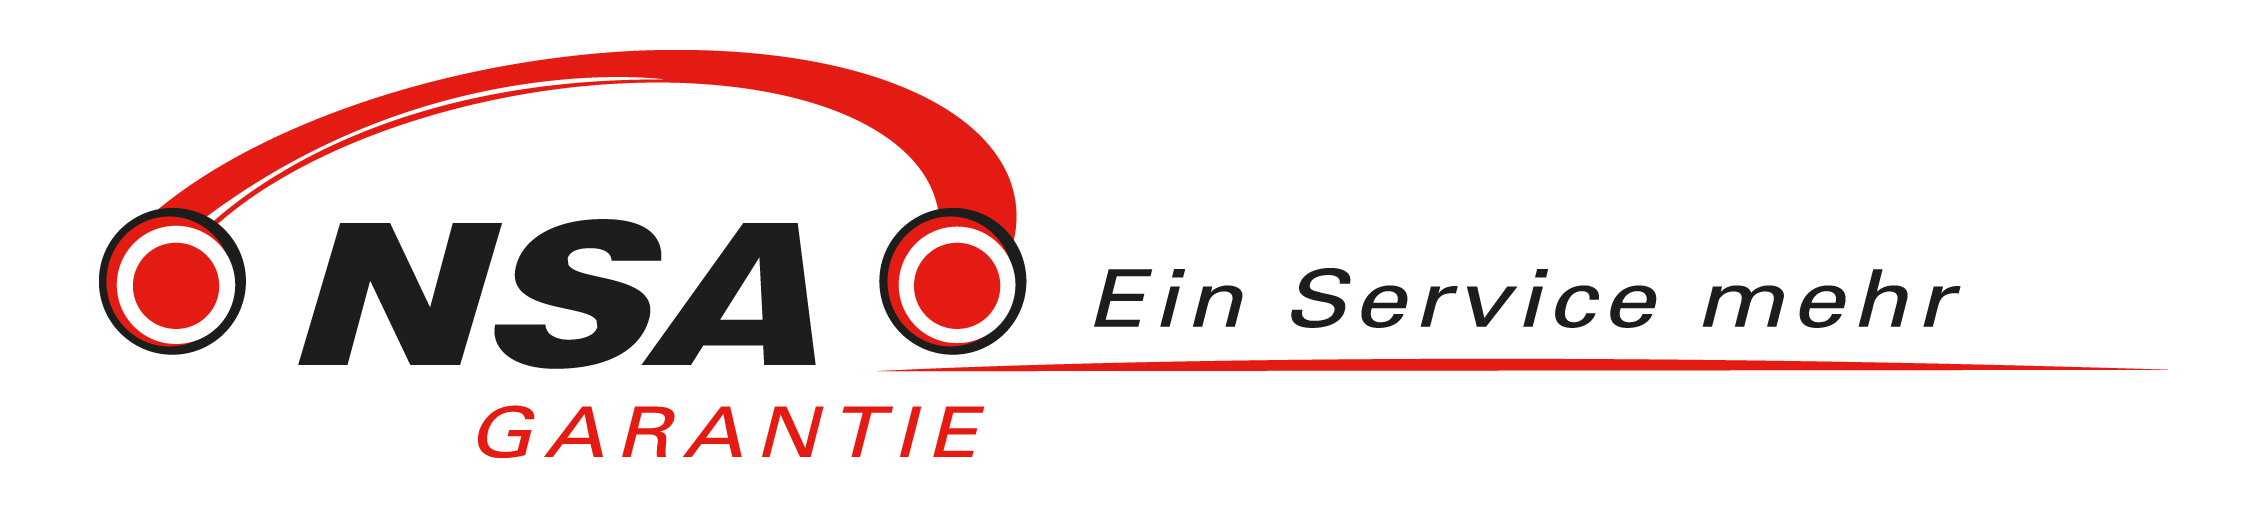 nsa-garantie-logo